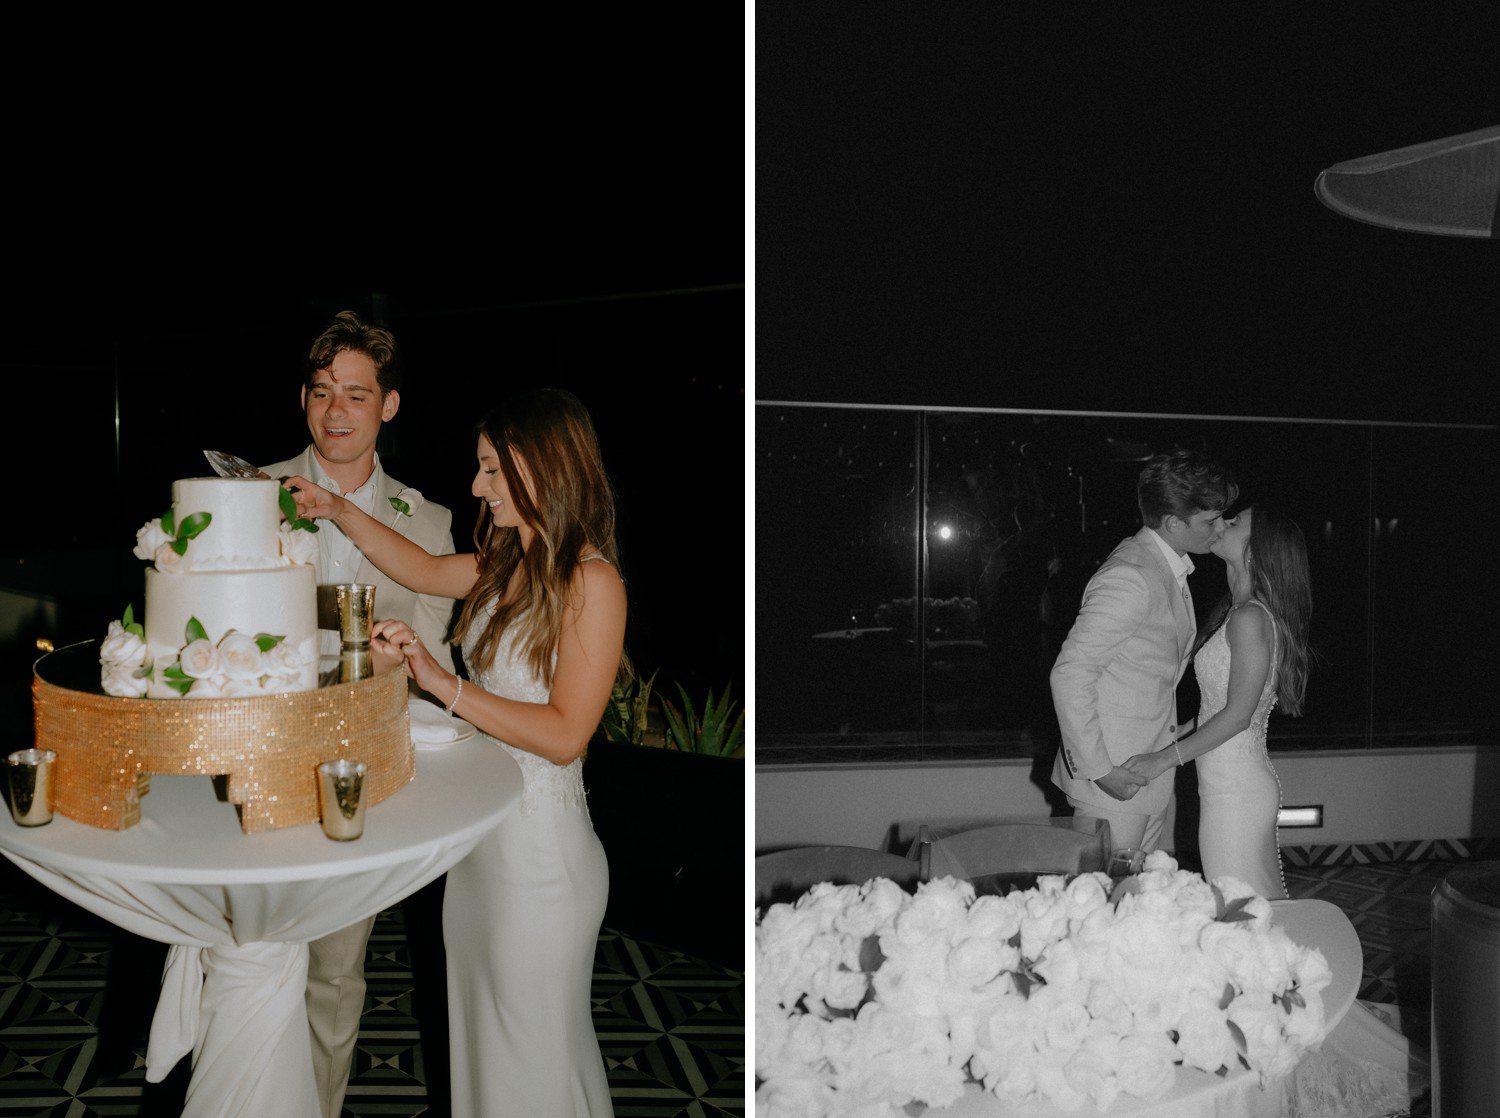 Bride and groom cutting wedding cake at reception at Los Cabos Hard Rock Hotel. 